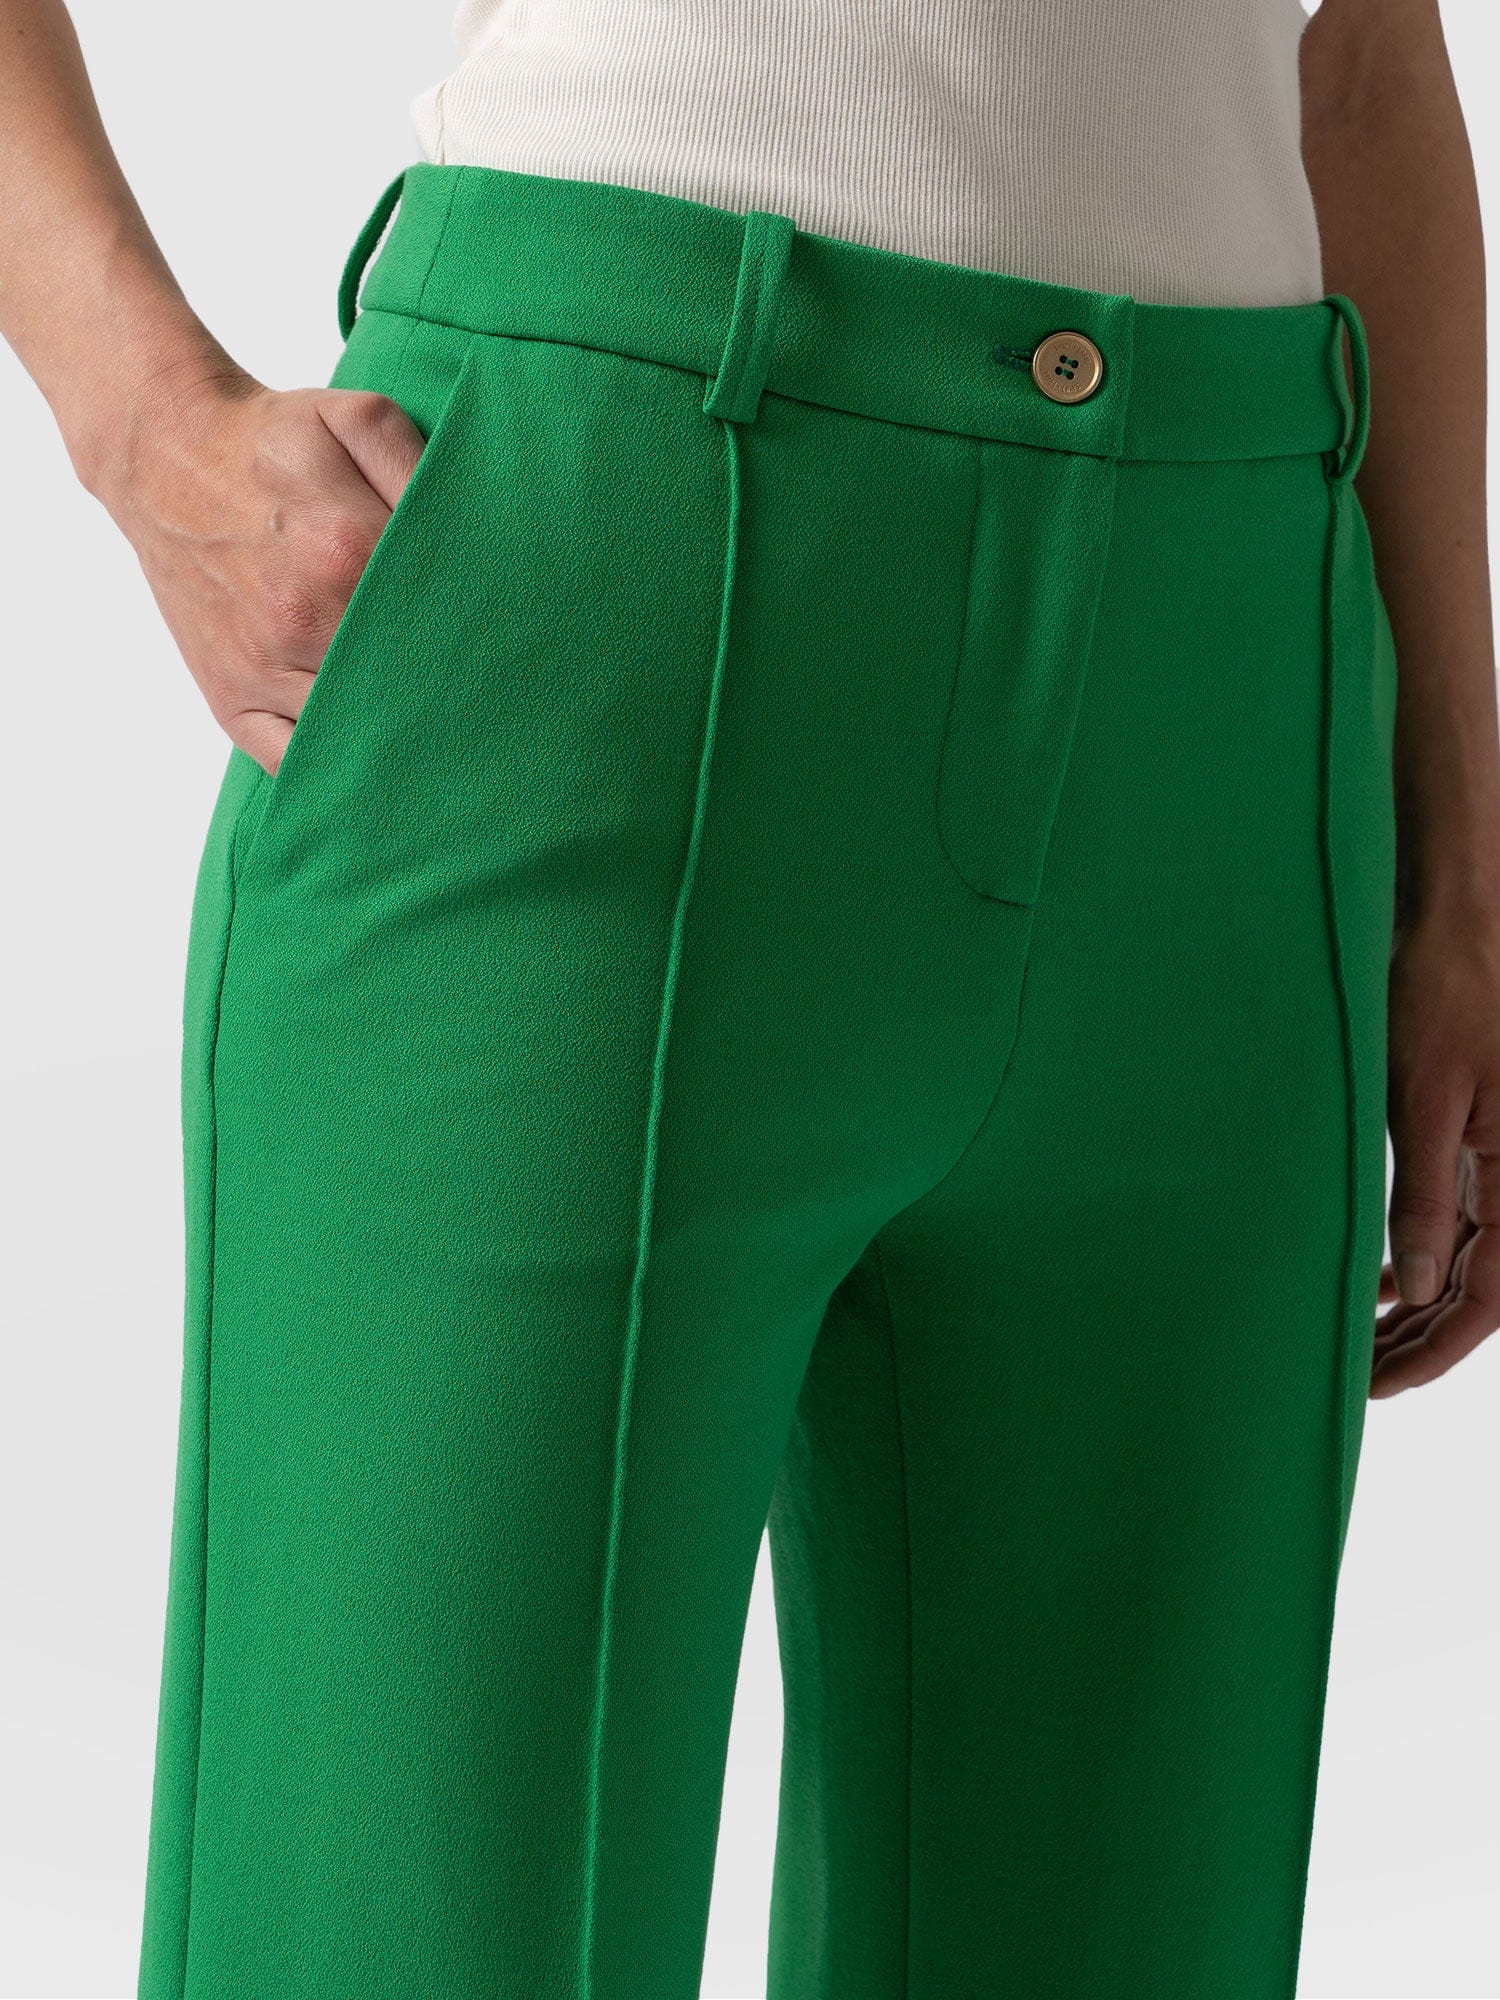 Cambridge Tailored Wide Leg Pant Emerald Green - Women's Trousers ...